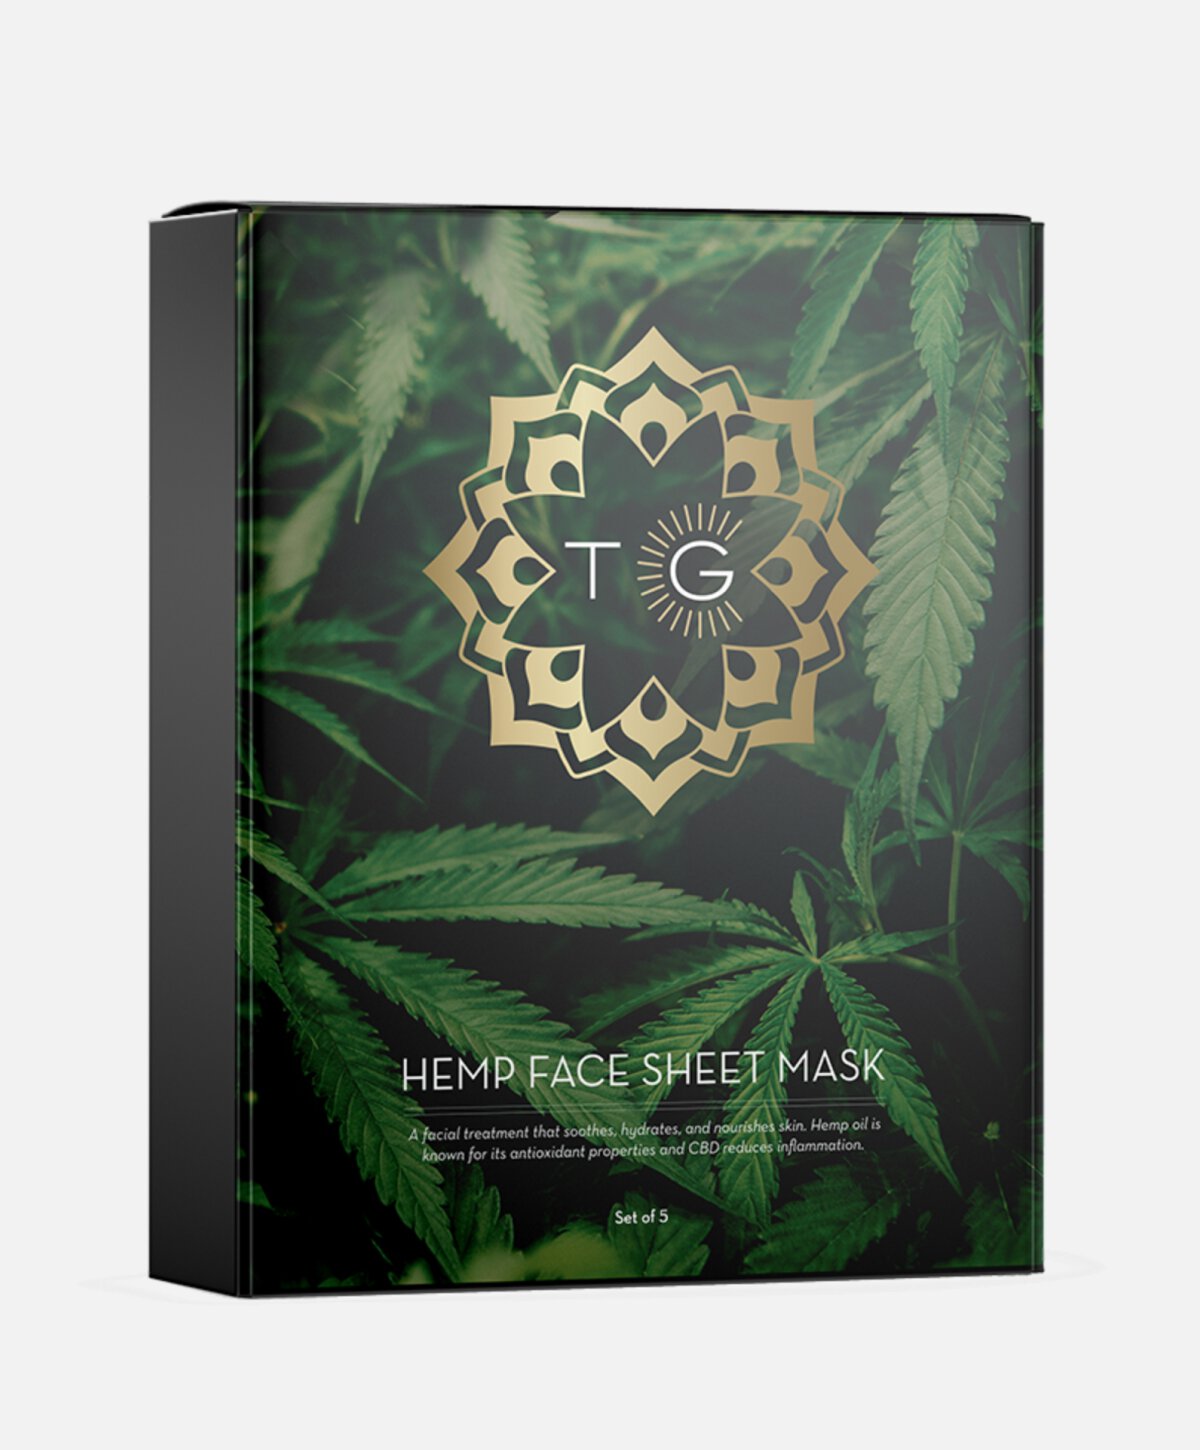 Total Glow hemp face sheet mask